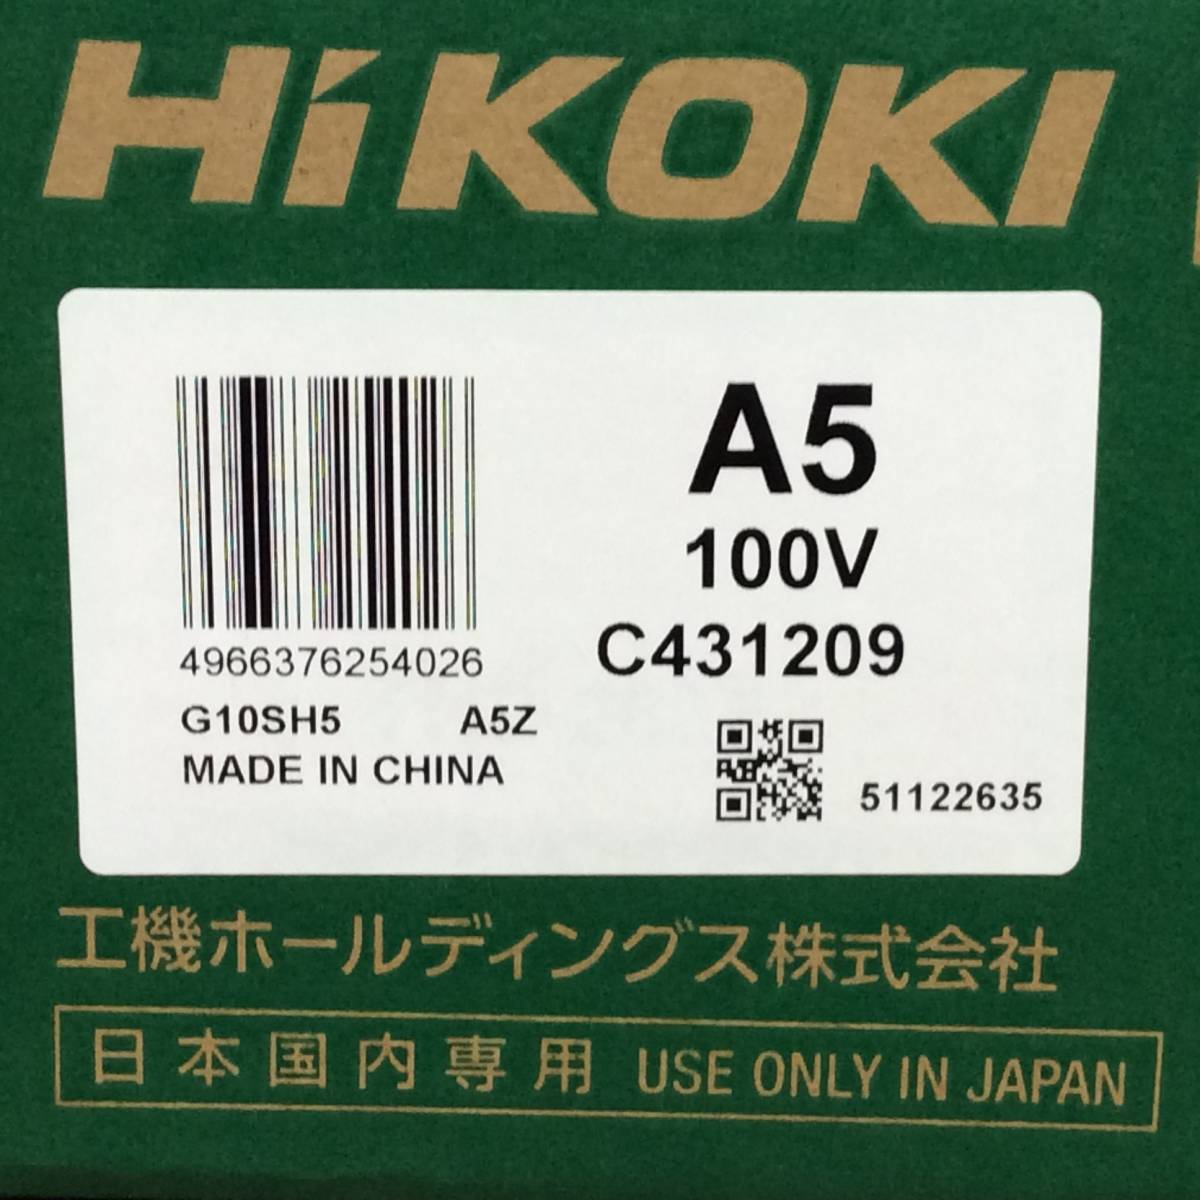 【WH-9028】未使用 HiKOKI ハイコーキ 電気ディスクグラインダ G10SH5(SS) 100V 細径 100mm 旧日立 日立工機_画像3